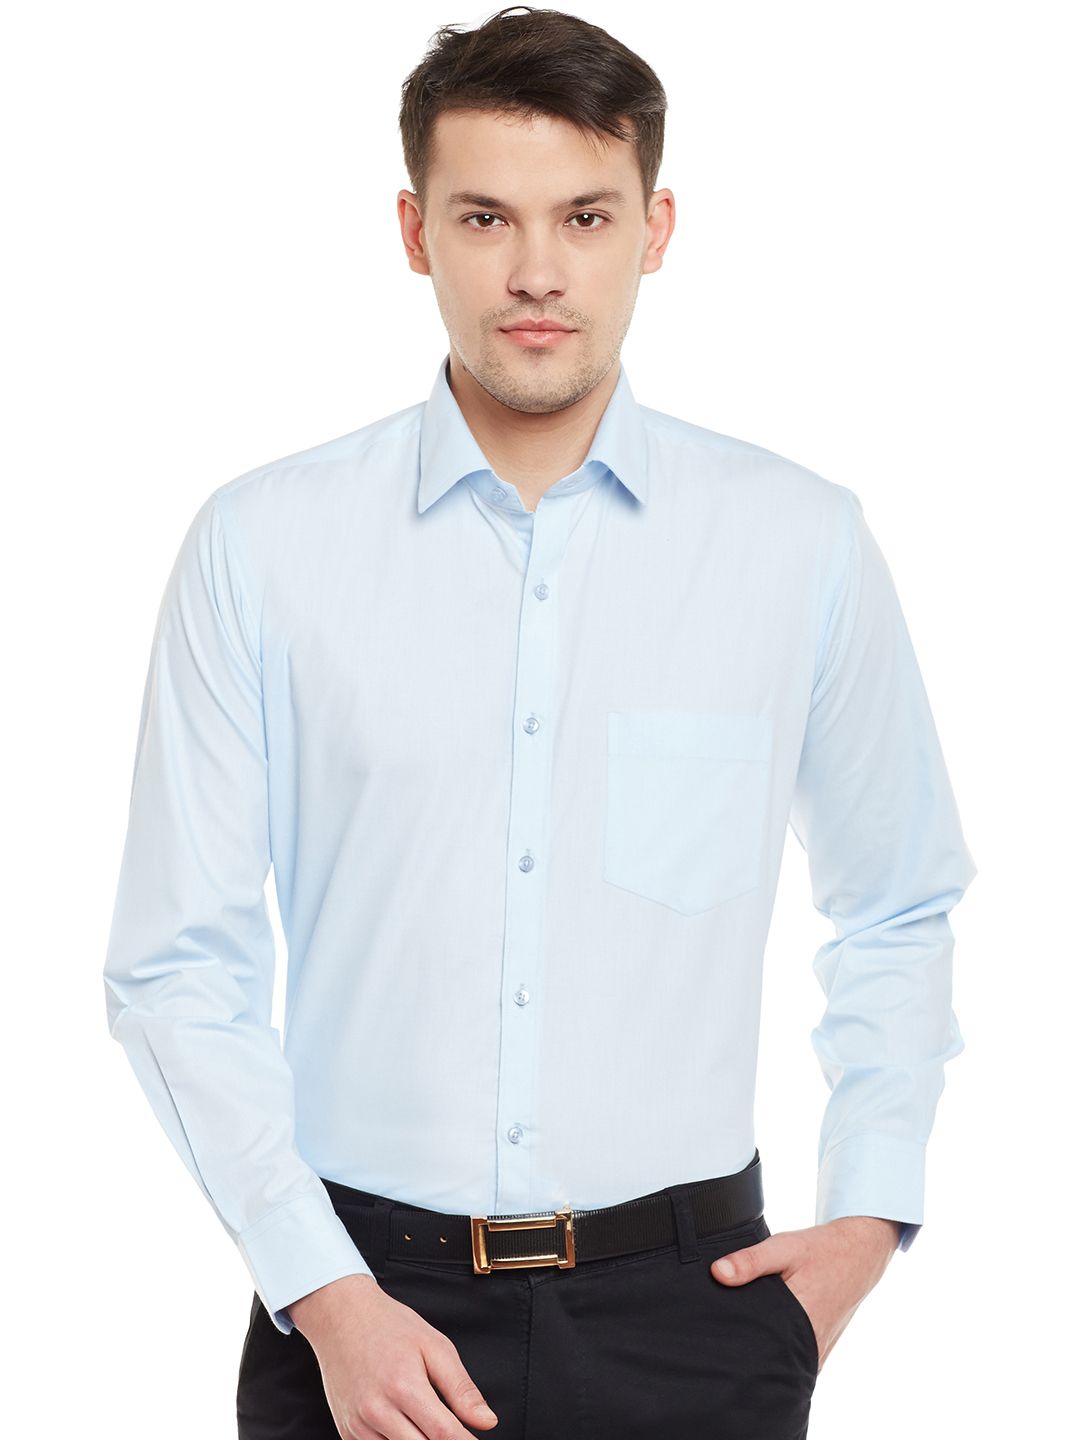 LaMode Blue Regular Fit Formal Shirt - Buy LaMode Blue Regular Fit ...